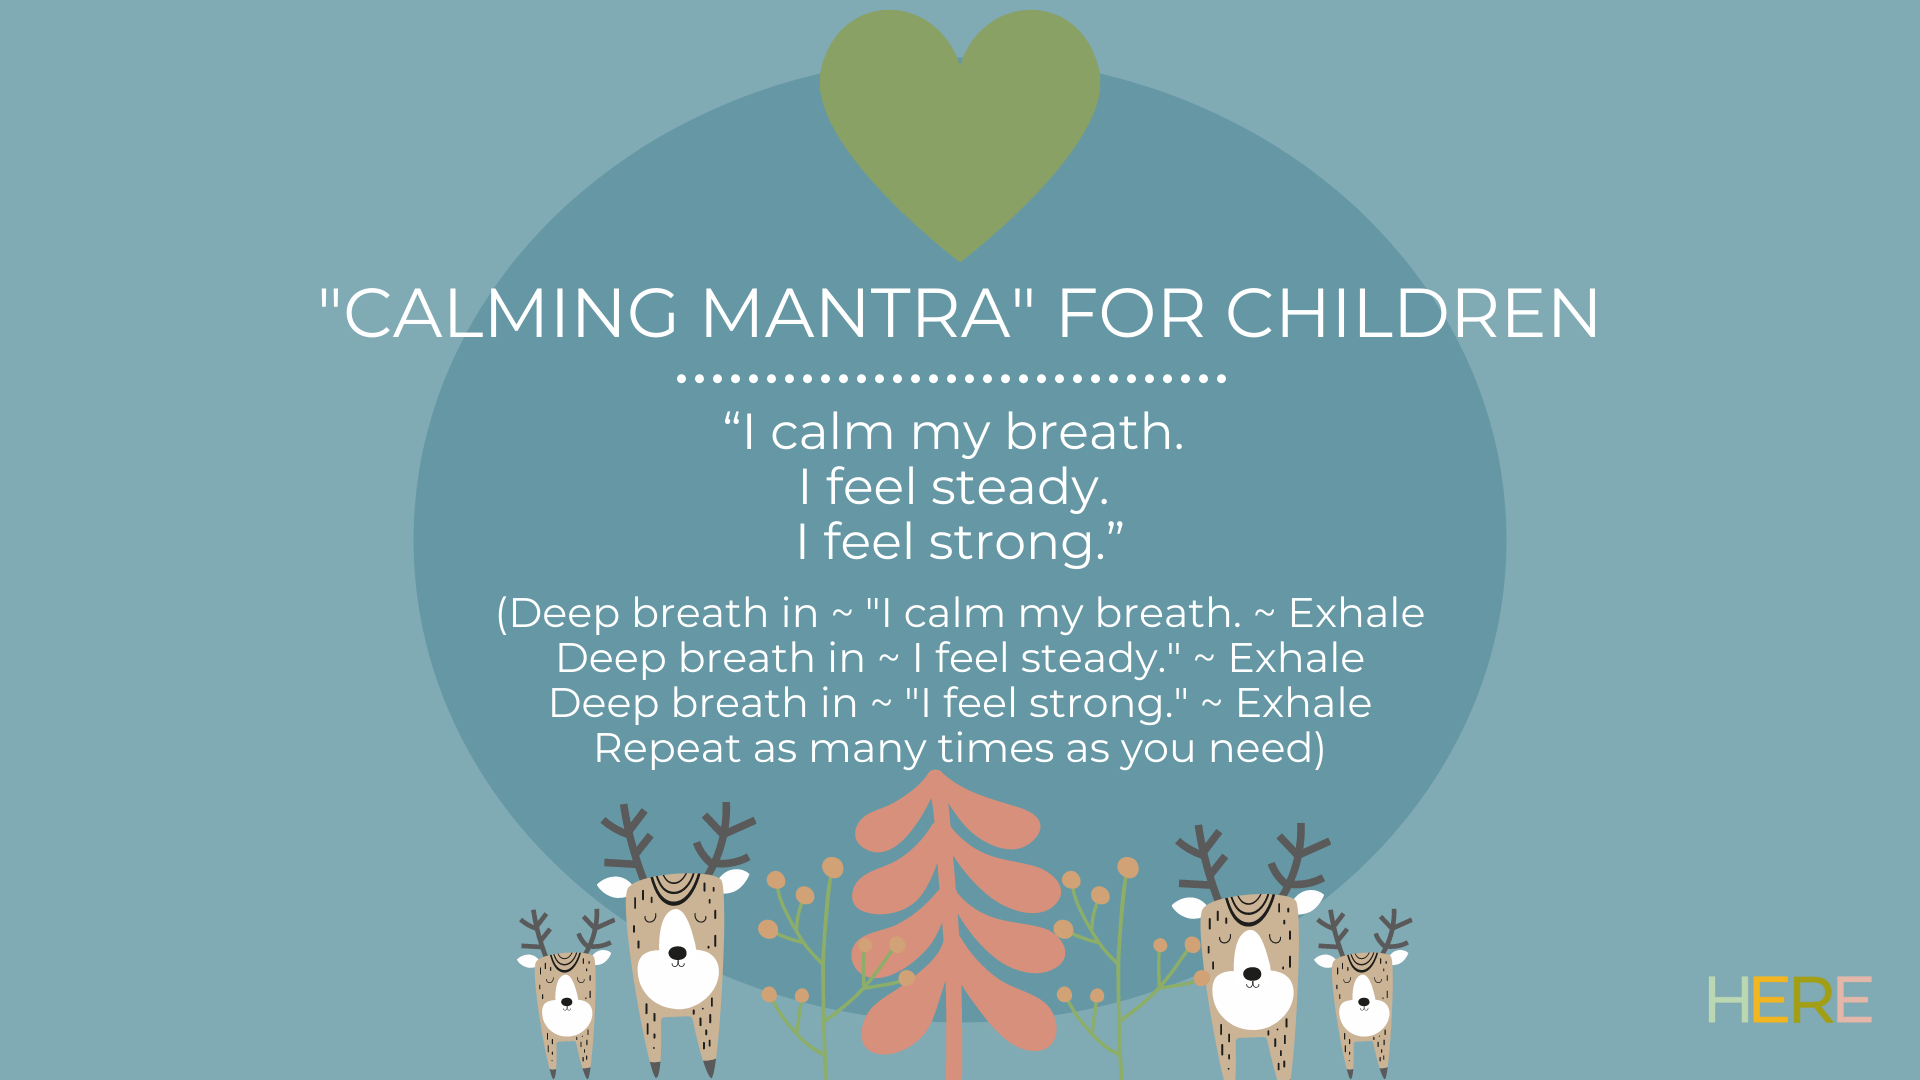 Calming mantra for children